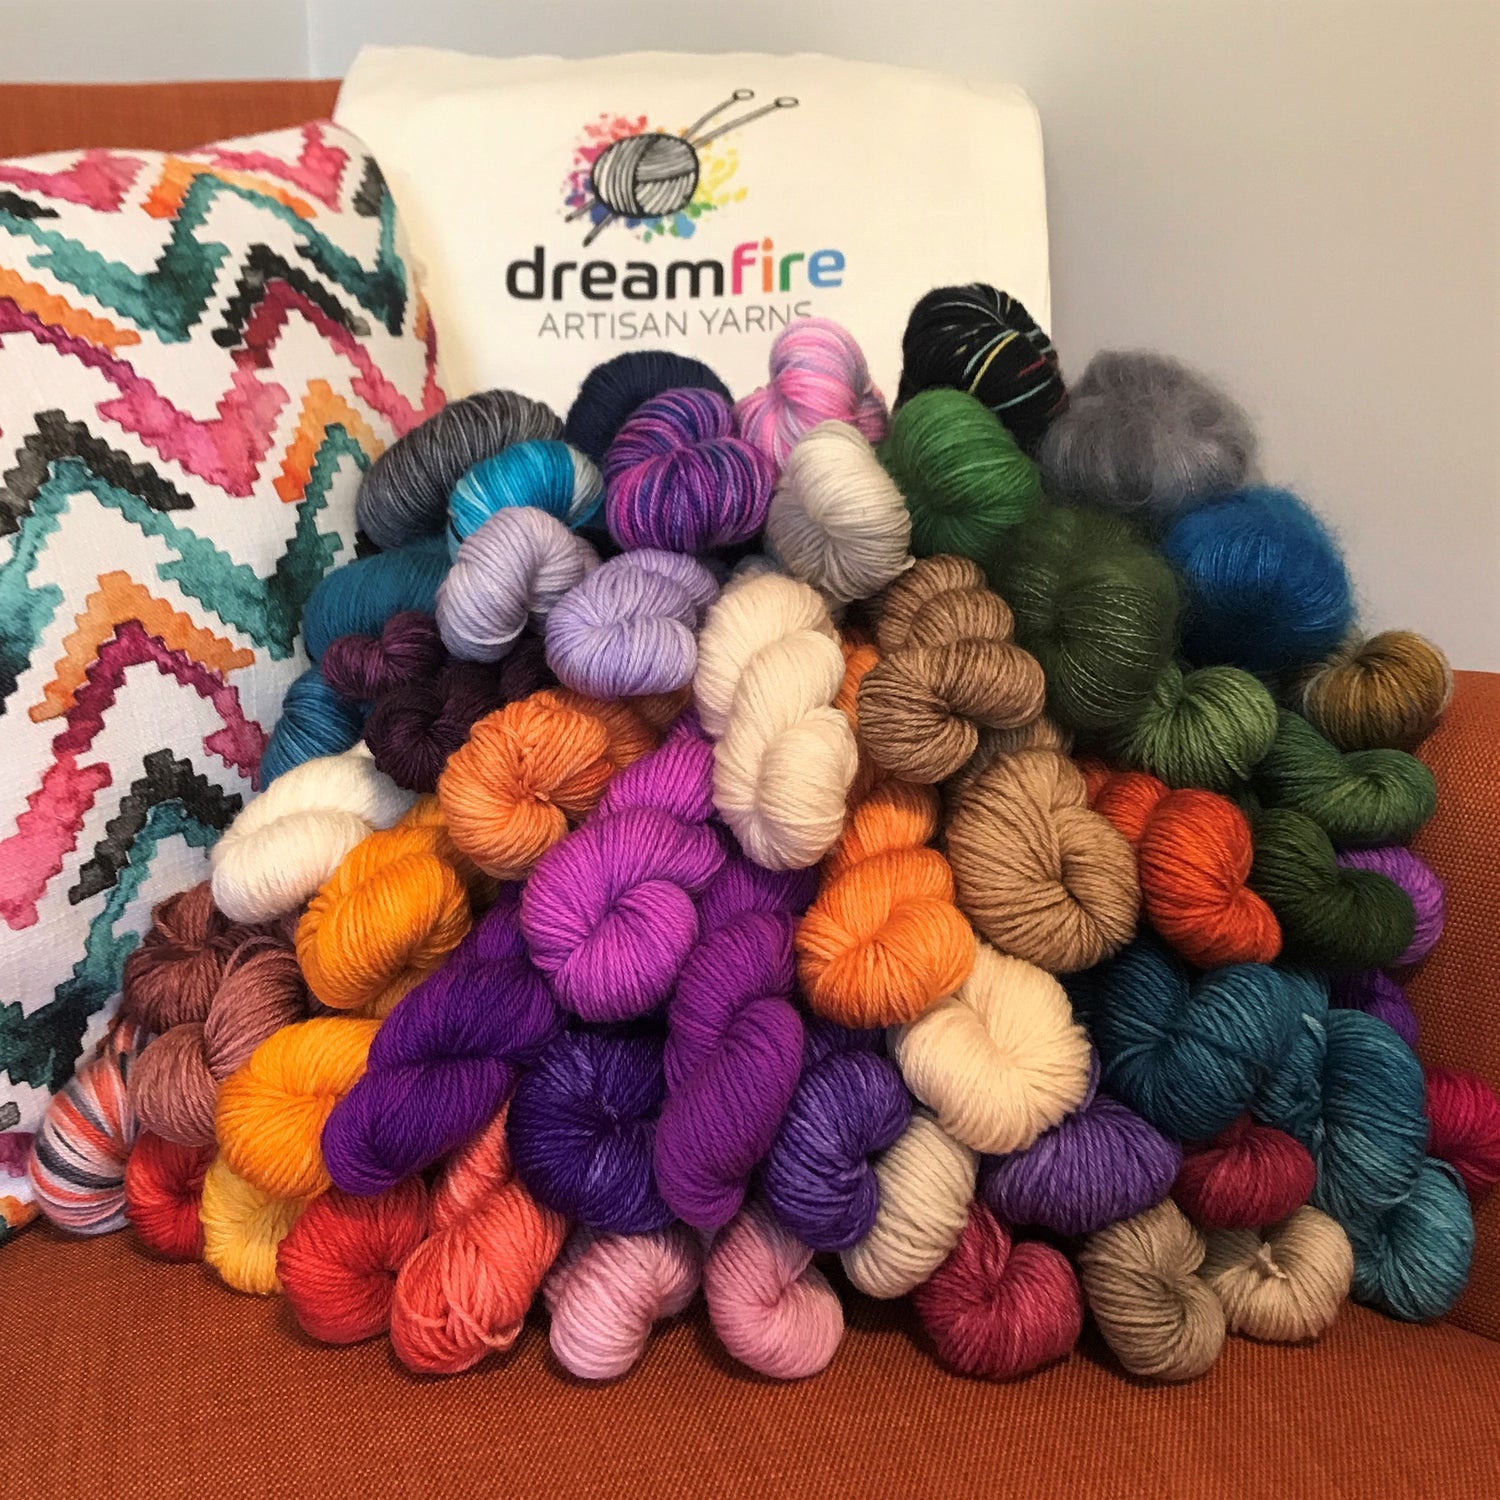 dreamfire indy dyed yarn